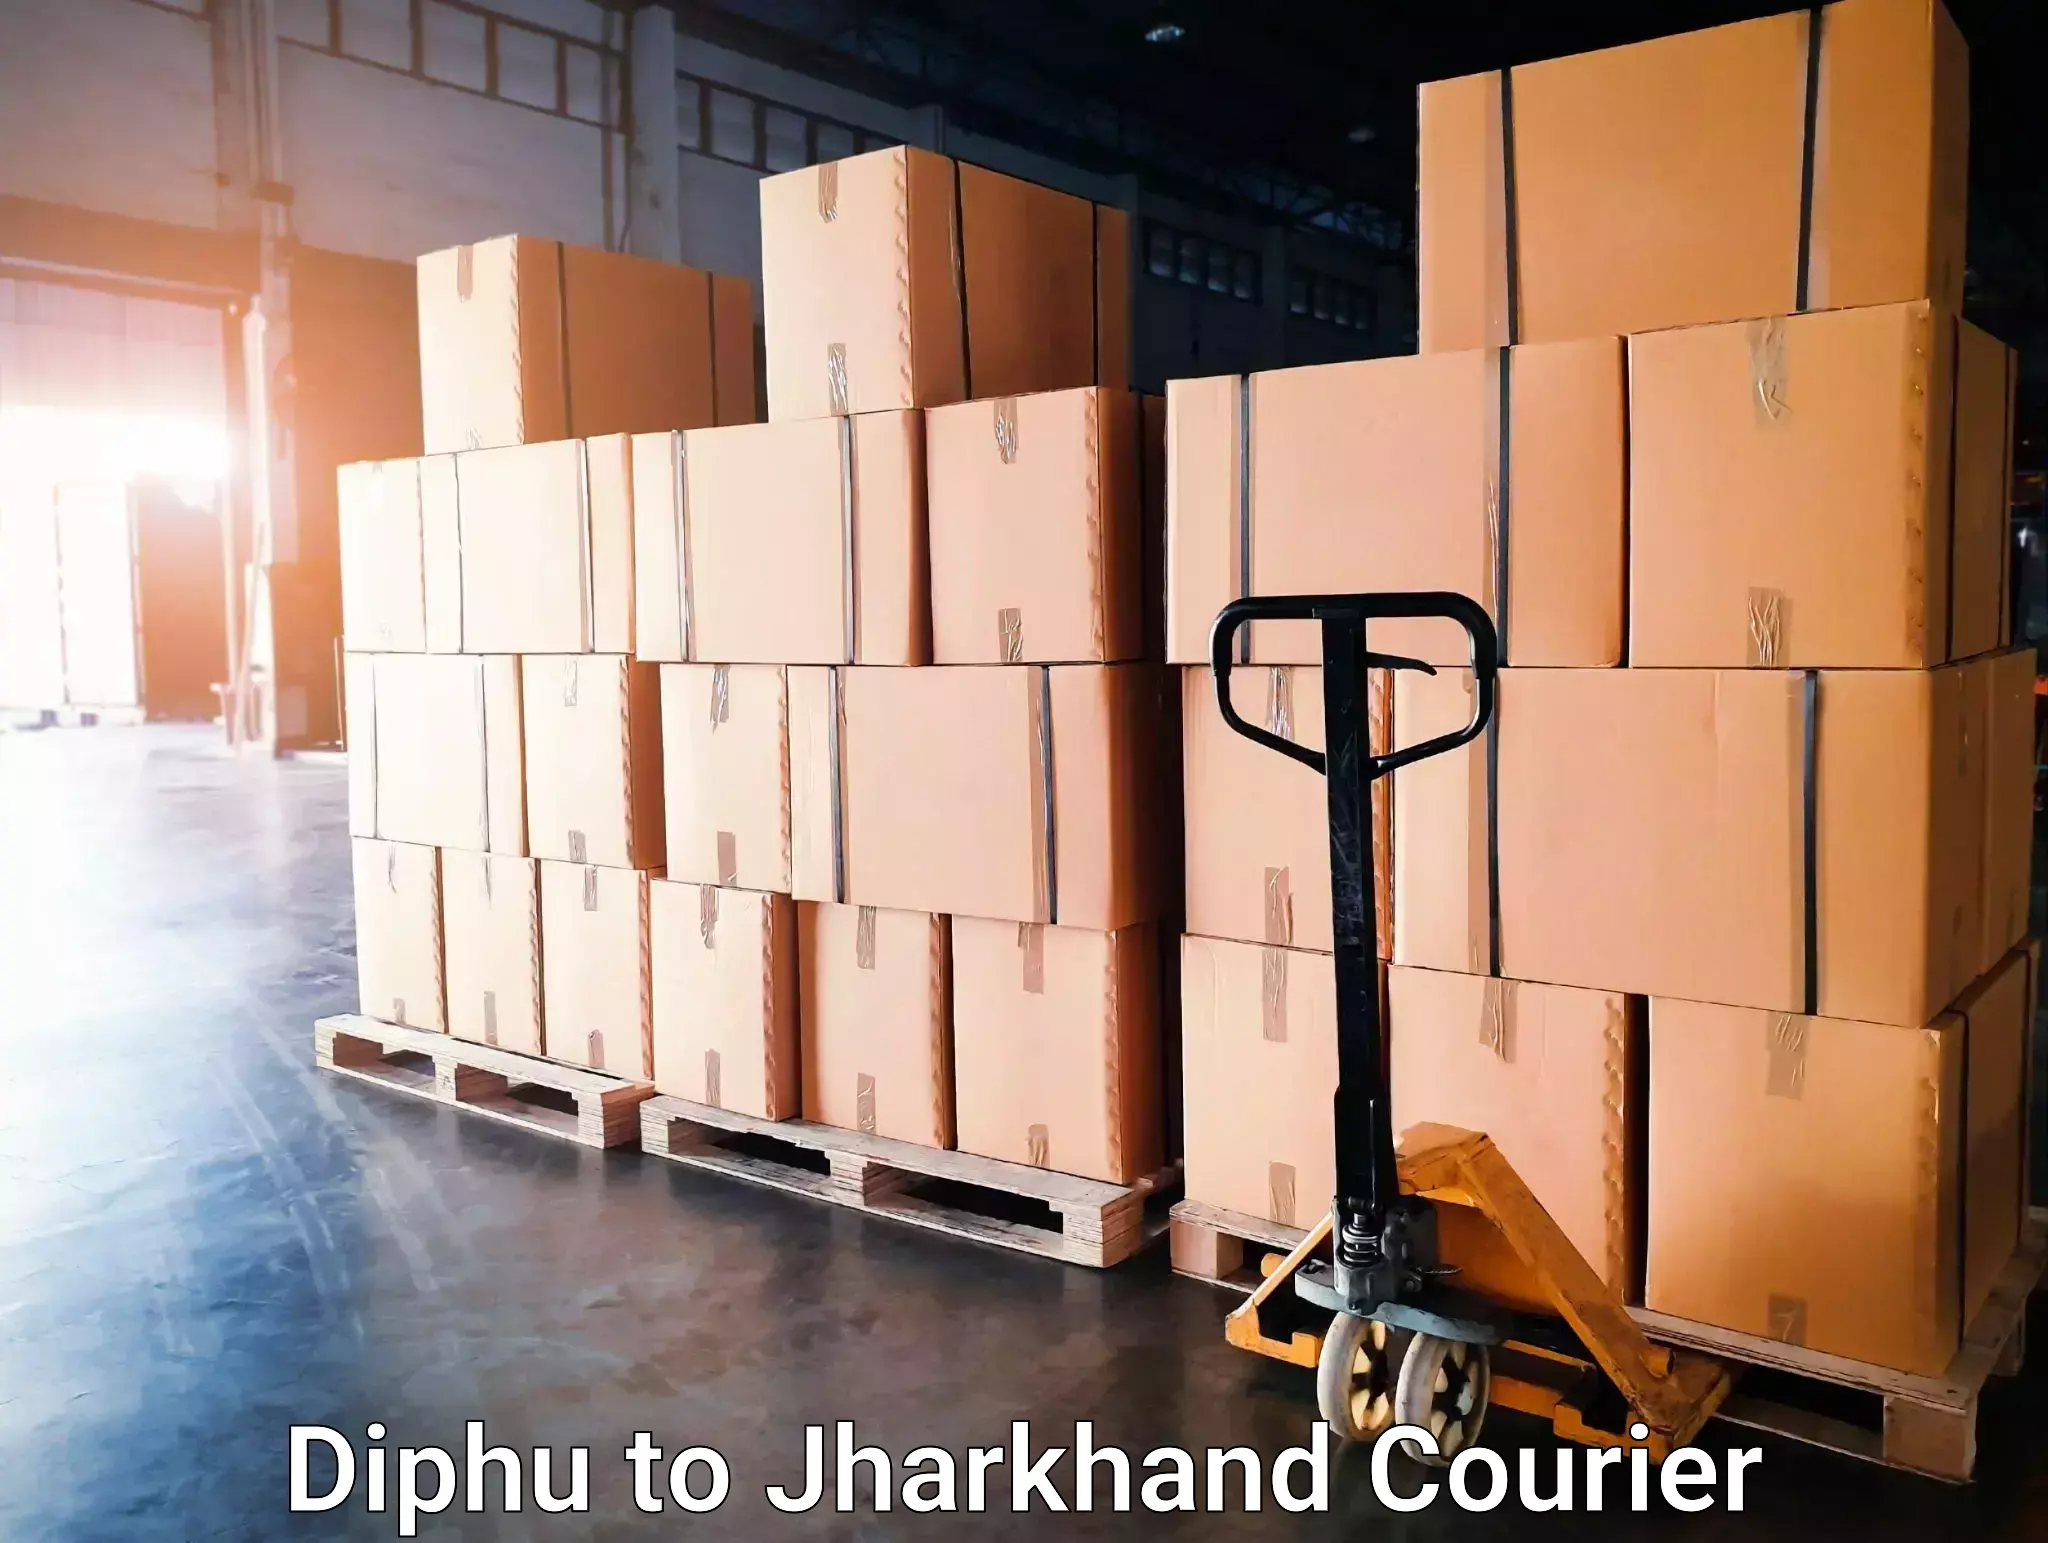 Efficient parcel service Diphu to Bokaro